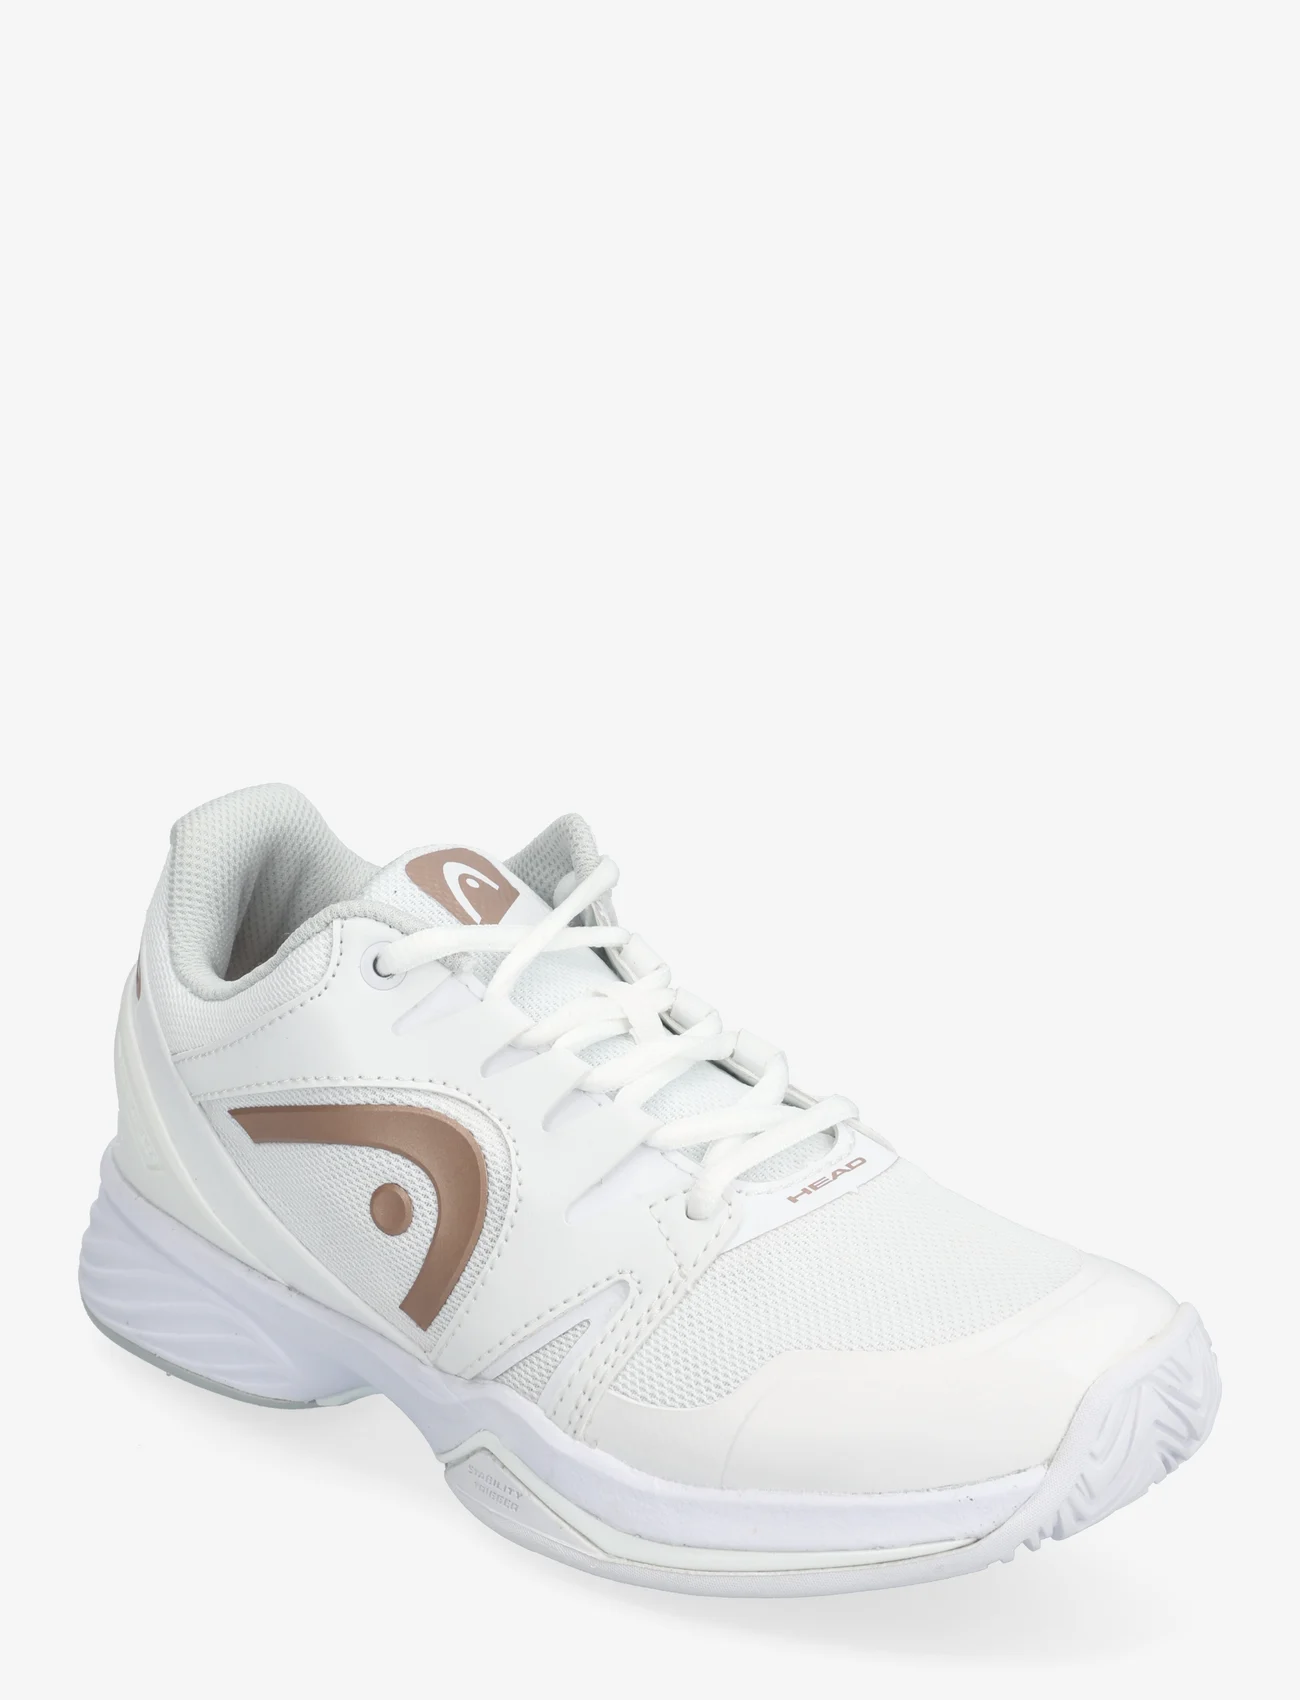 Head - Sprint Ltd. Women WHWH - racketsports shoes - white / white - 0